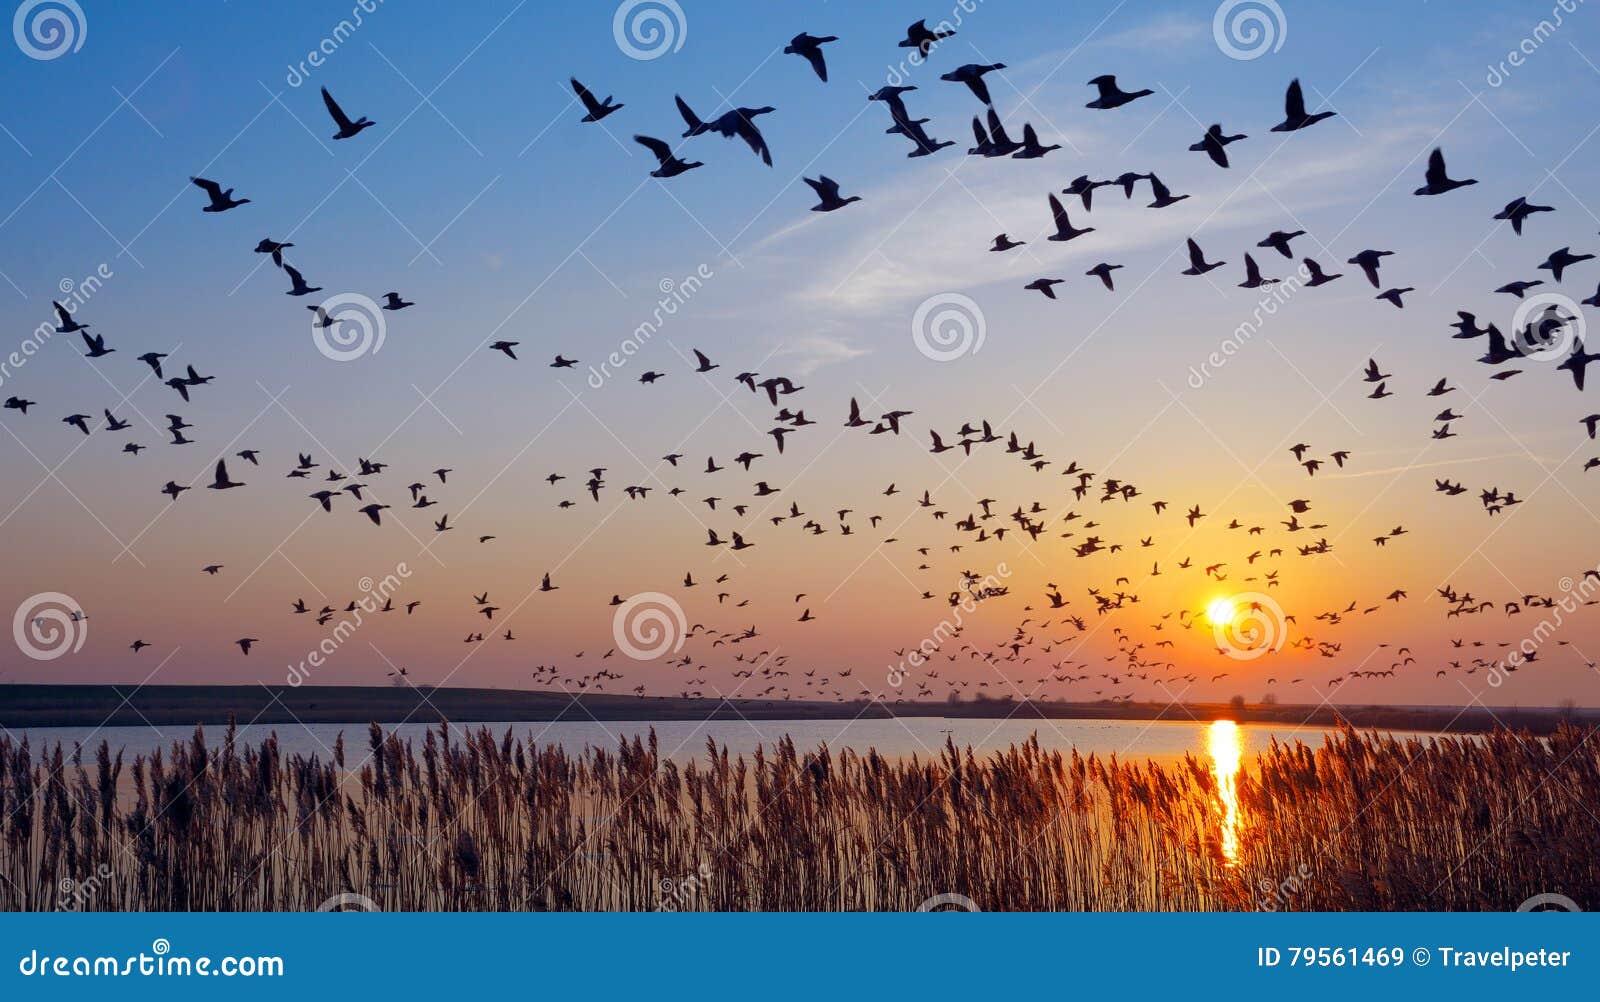 barnacle geese,east frisia,north sea,germany